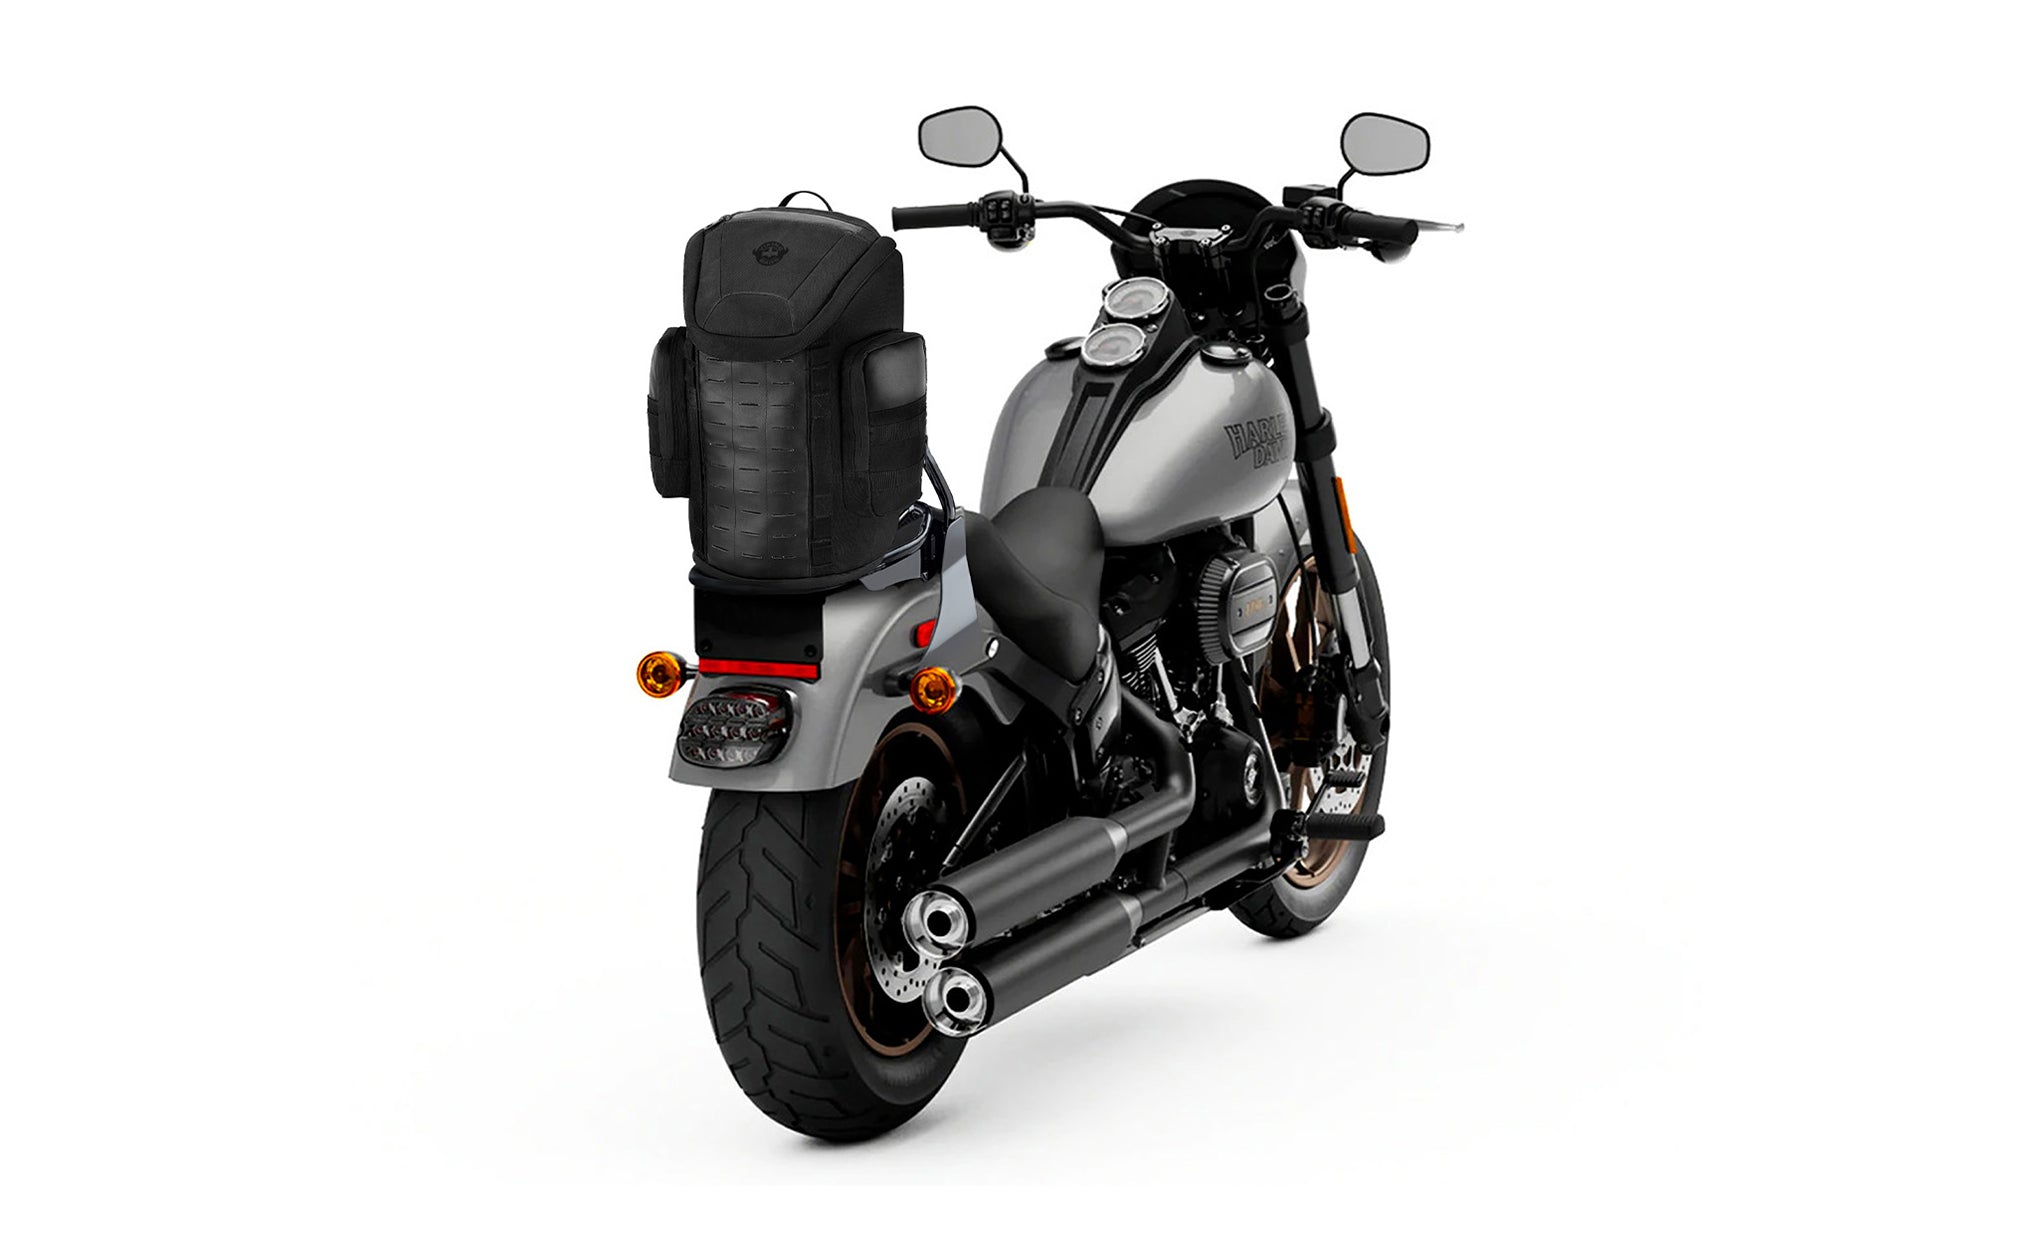 Viking Patriot Medium Honda Motorcycle Backpack Bag on Bike View @expand